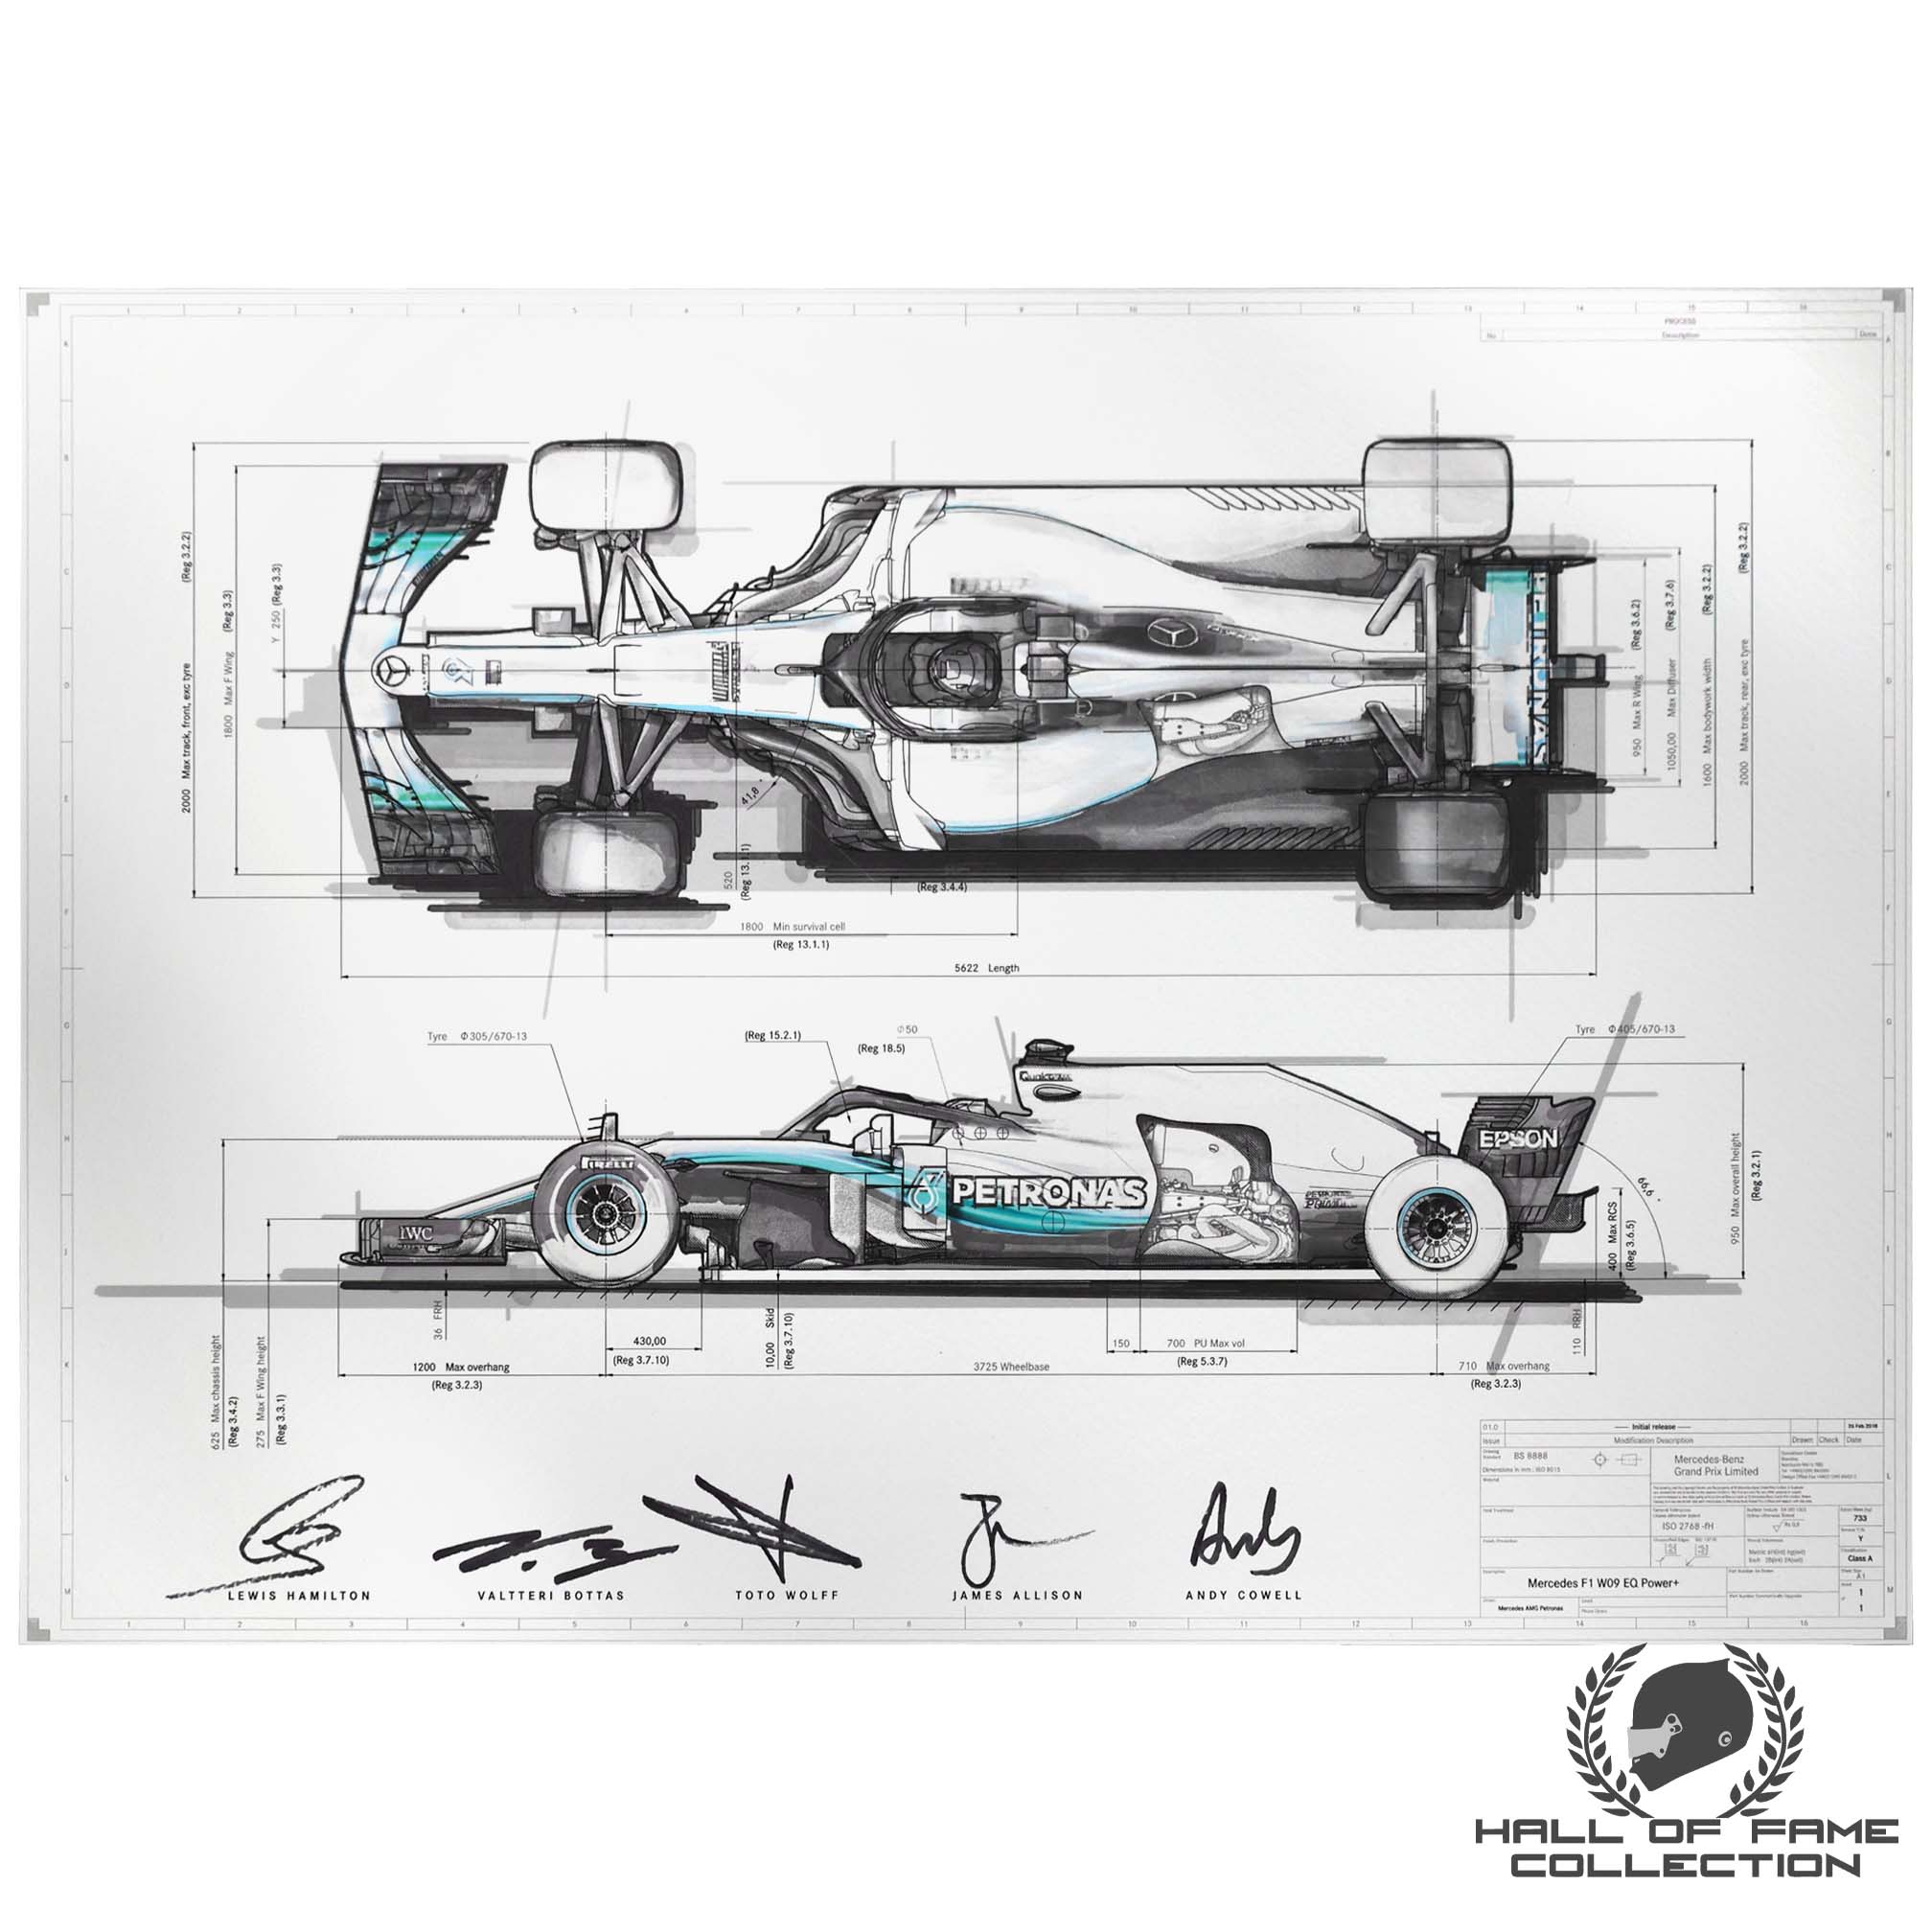 2018 Lewis Hamilton Valtteri Bottas Toto Wolff James Allison Andy Cowell Signed Mercedes W09 F1 Print